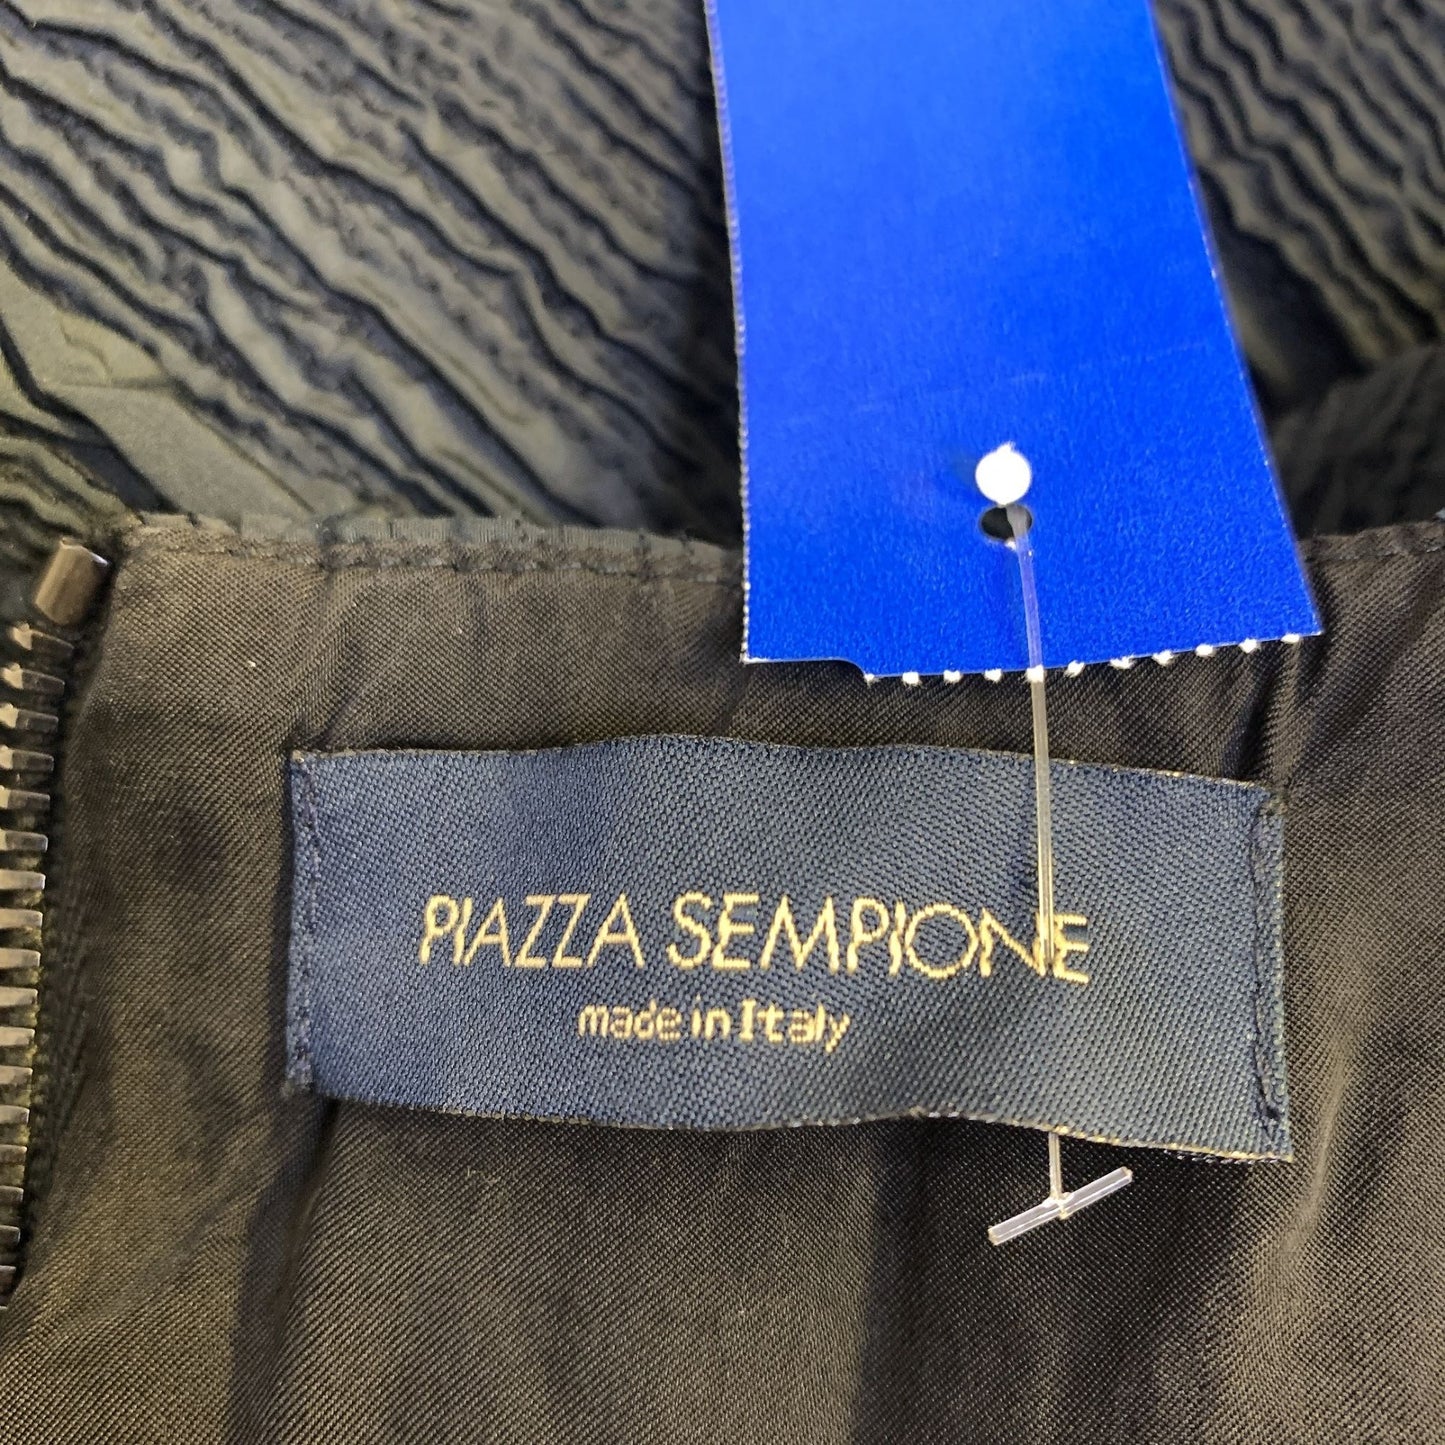 Piazza Sempione MadeIn Italy Black Textured Sheath Dress Size 8 (Italian 44)